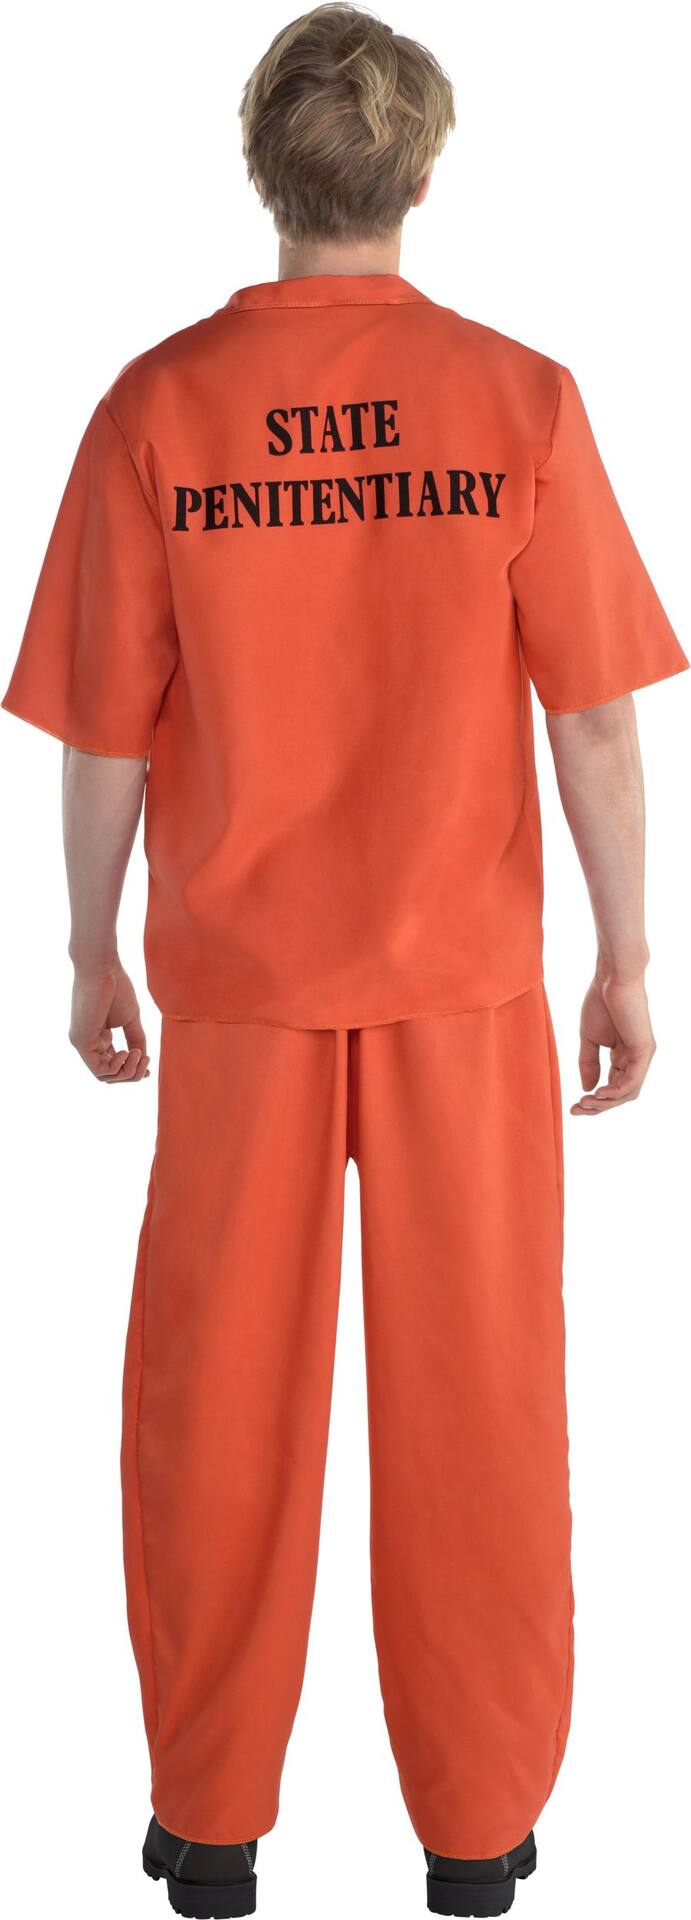 Orange Prisoner Halloween Costume  Prisoner Halloween Costume Womens   Women  Aliexpress